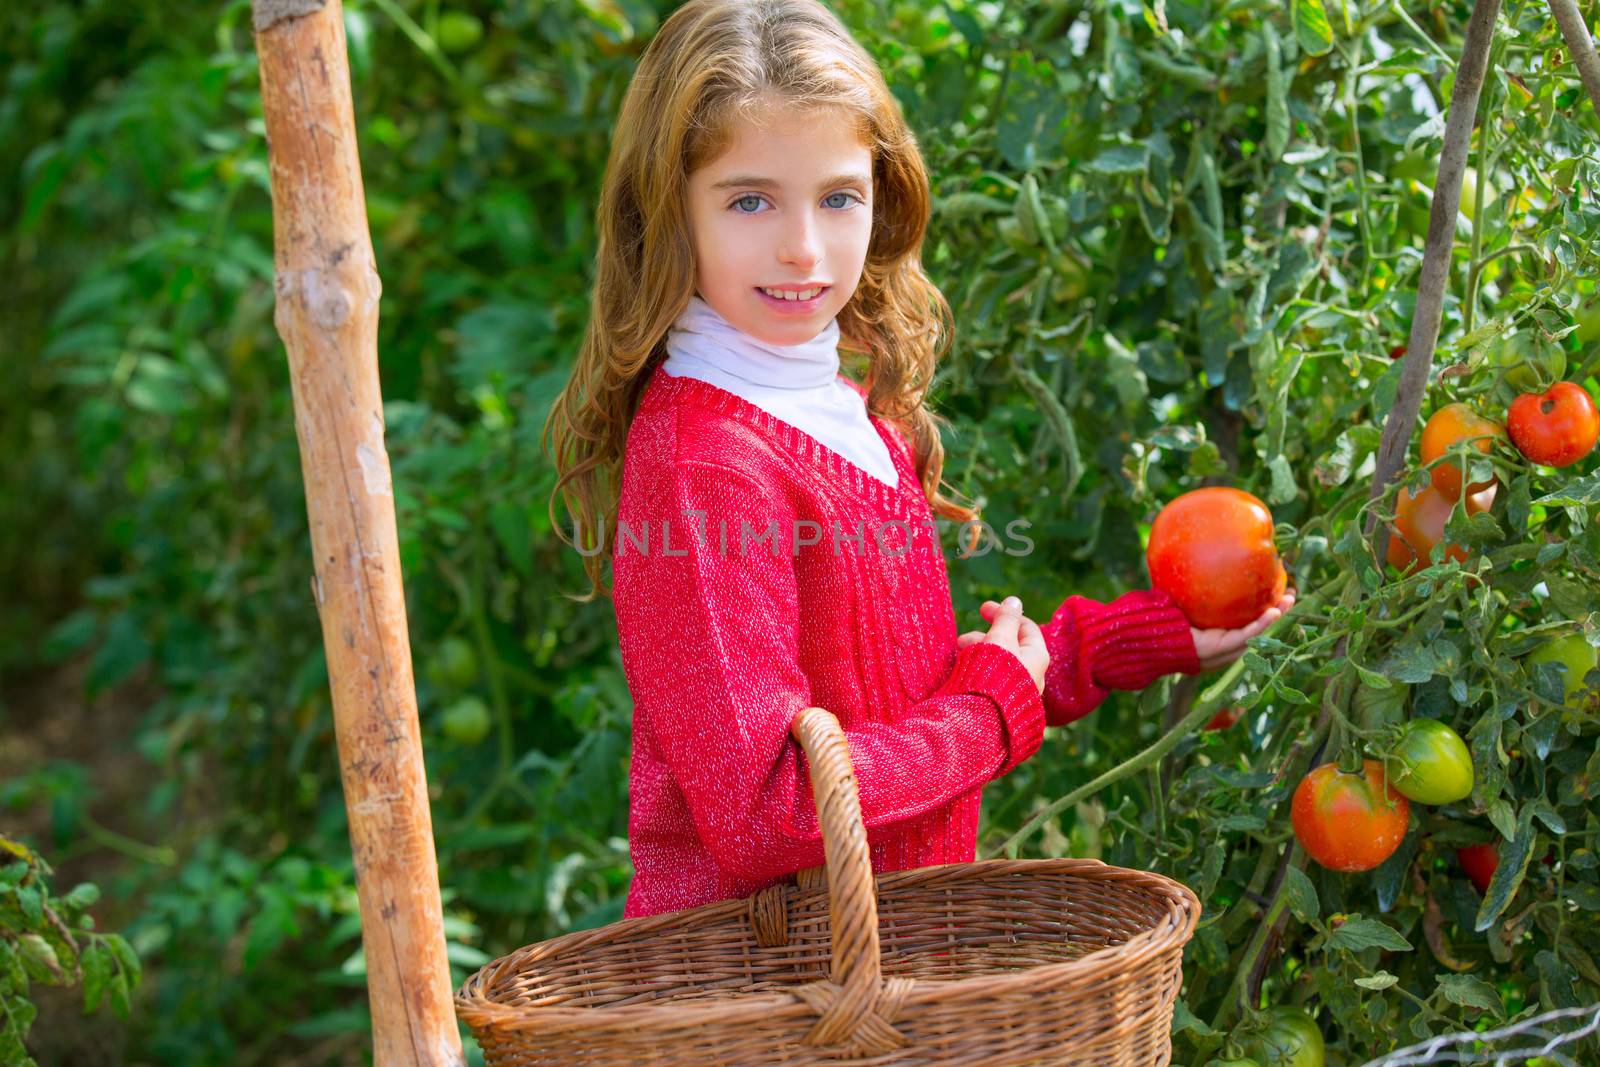 Farmer kid girl harvesting tomatoes in a home family farm